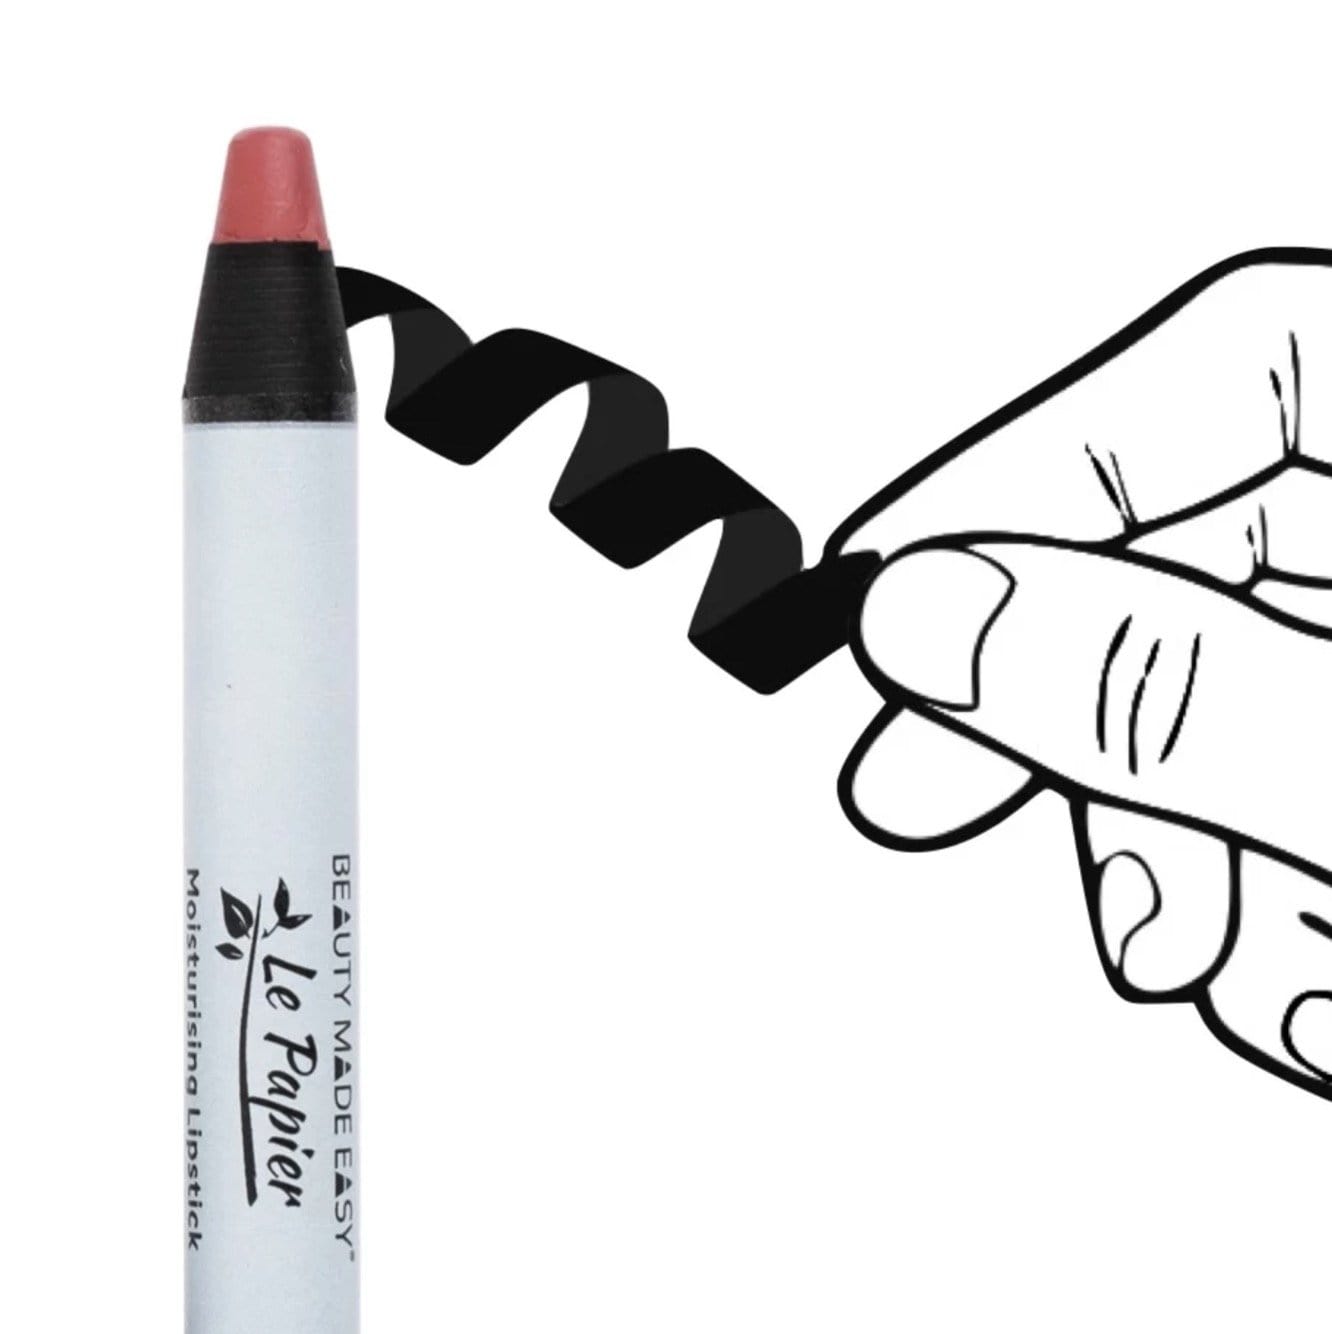 Glossy Nude Lipsticks - Plastic Free Amsterdam